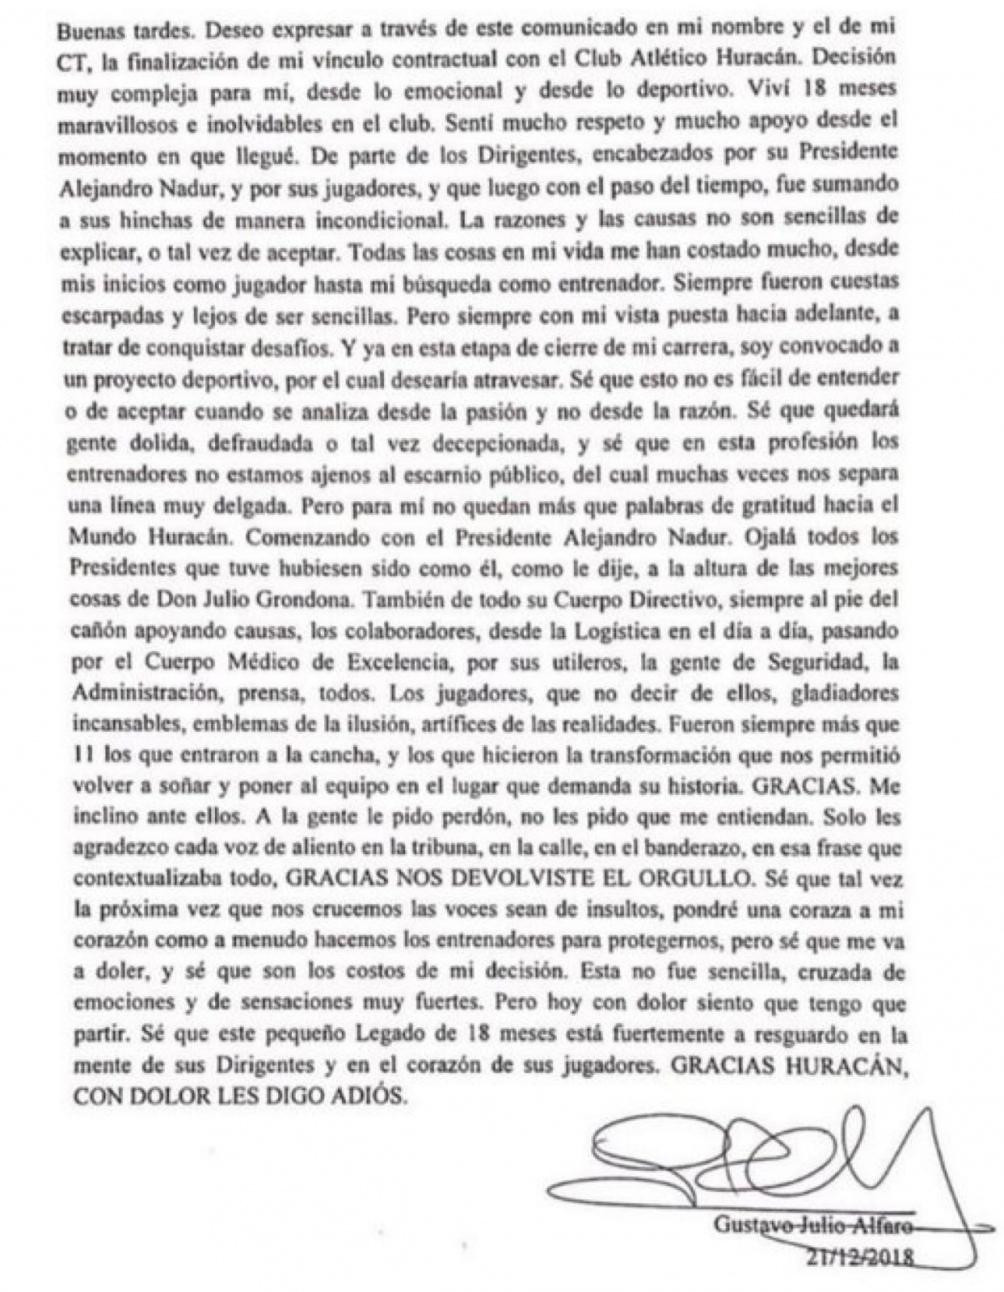 Carta de despedida de Gustavo Alfaro de Huracán